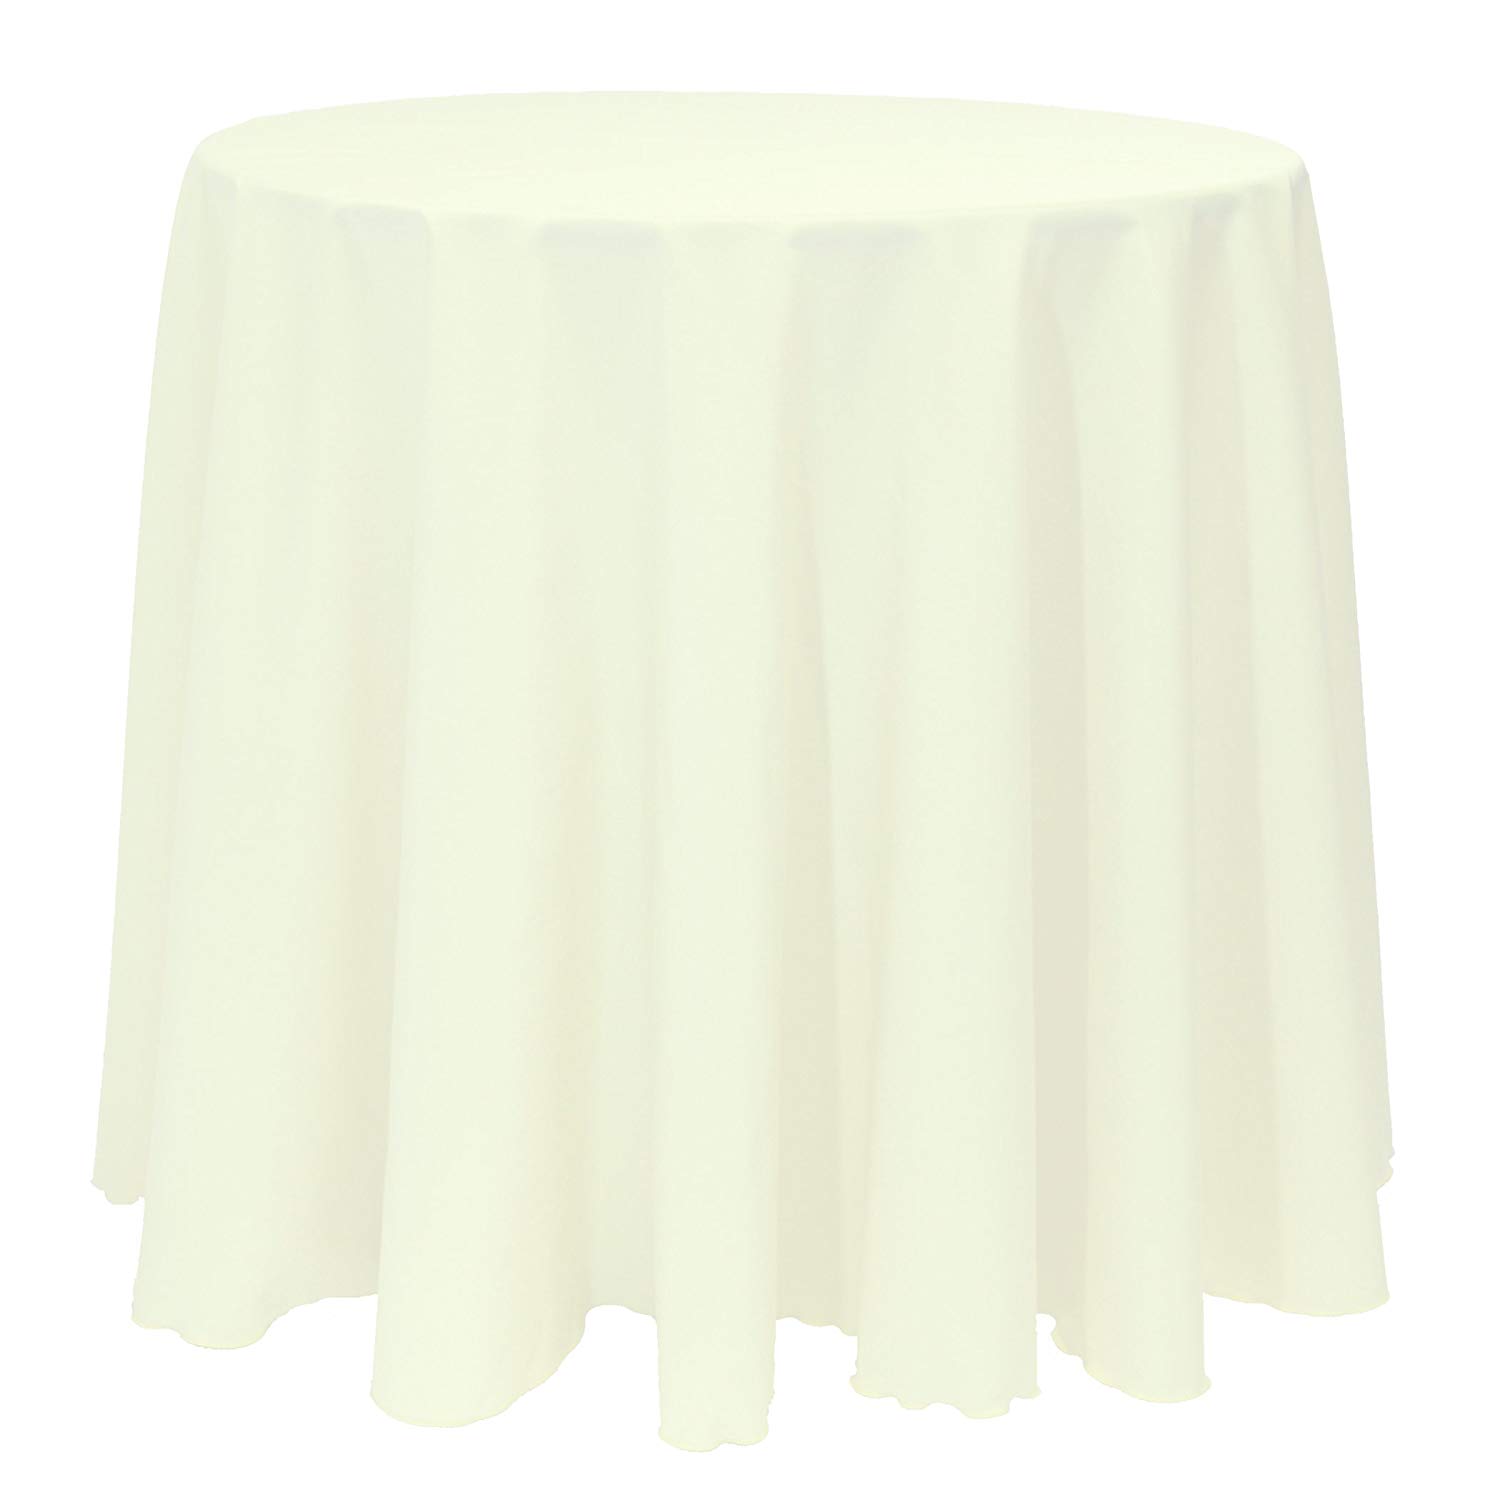 Spun Polyester Tablecloth ivory